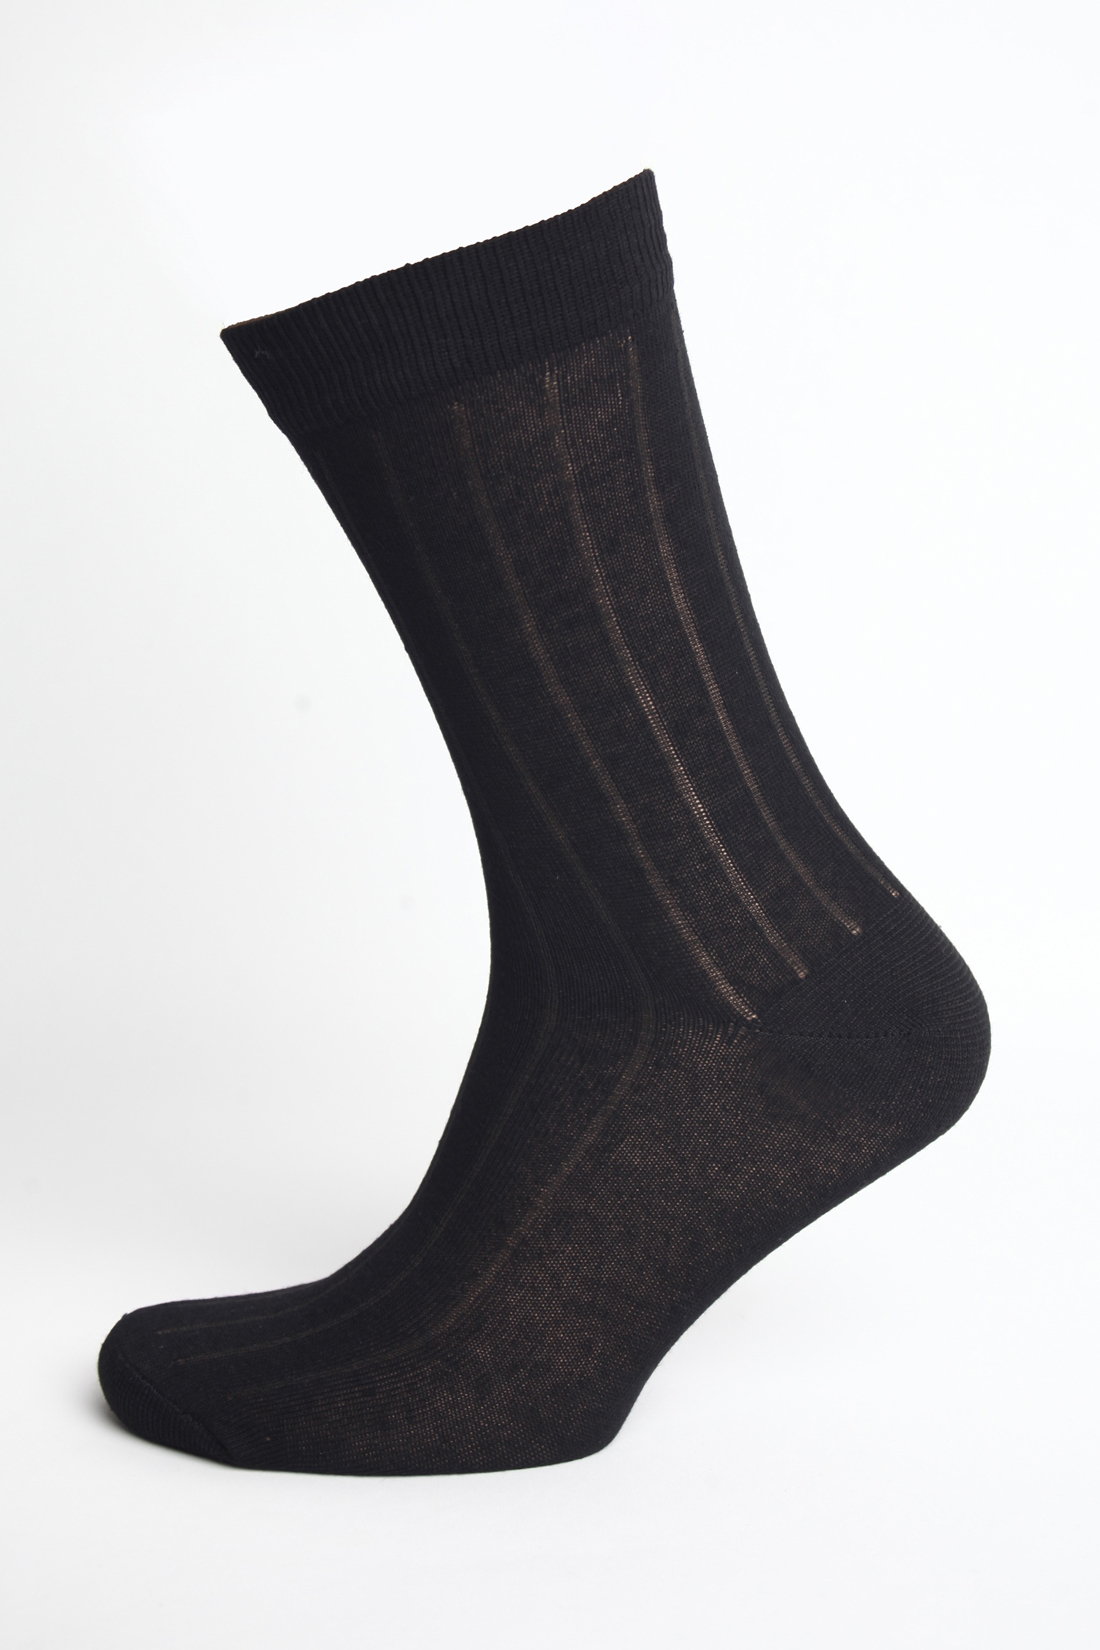 Мужские носки, 1 пара (арт. baon B891010), размер 43/45, цвет черный